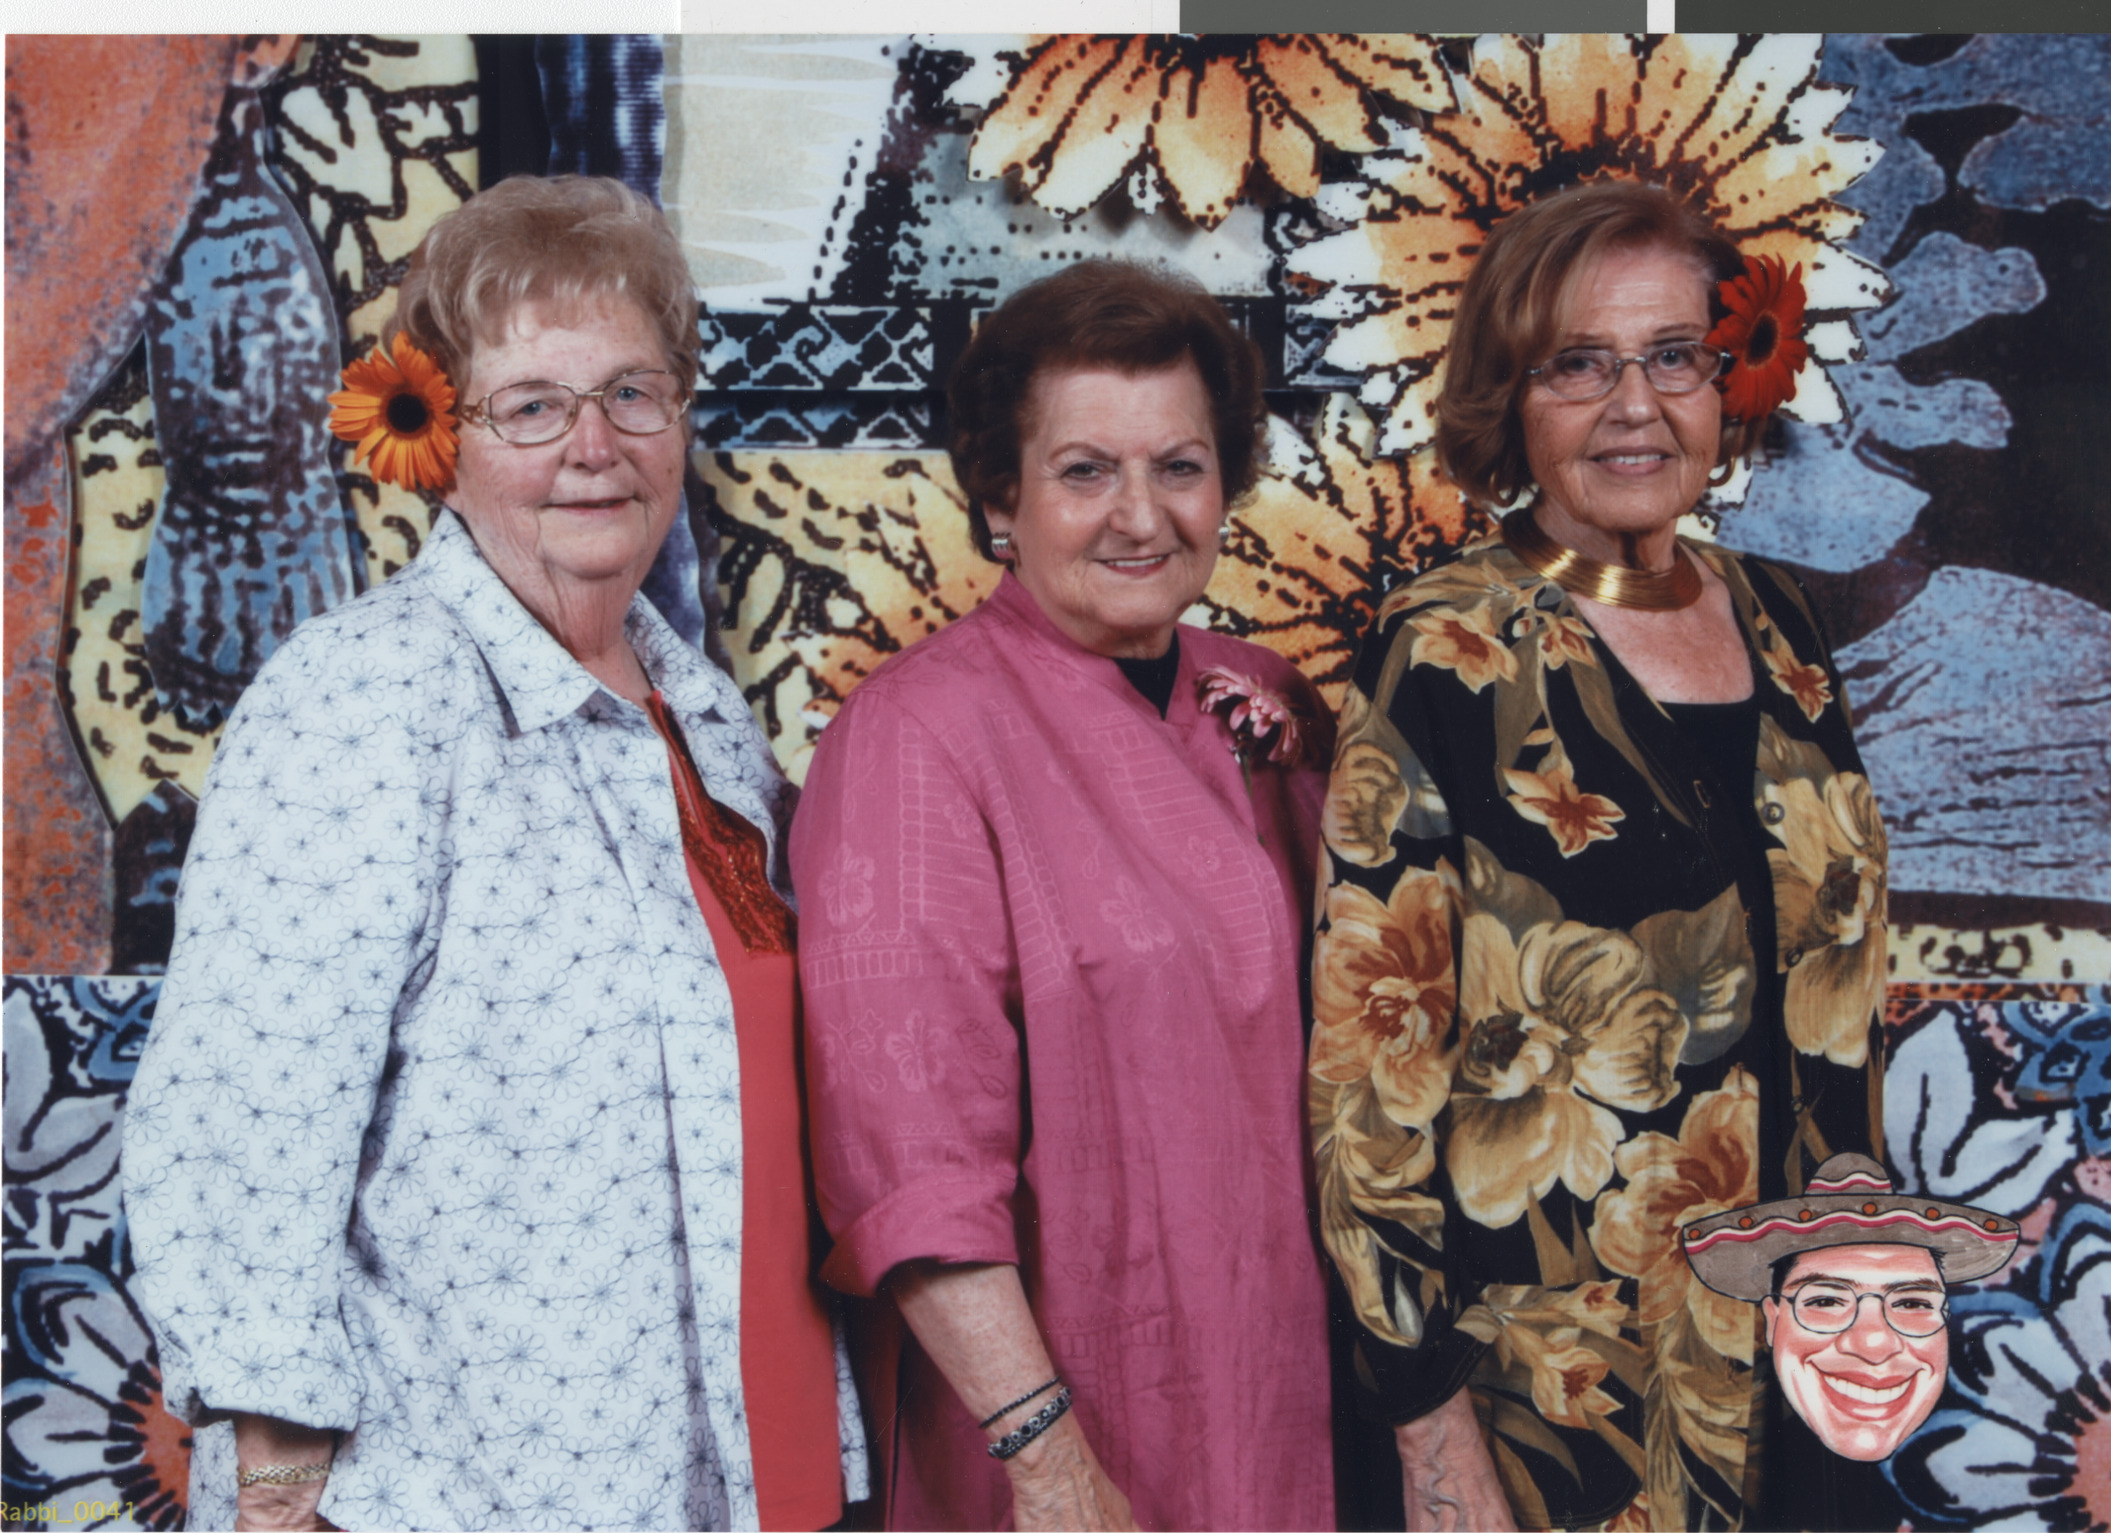 Photographof Adele Salton (Baratz), Mimi Katz and Florence Frost at a gala, 2000-2010